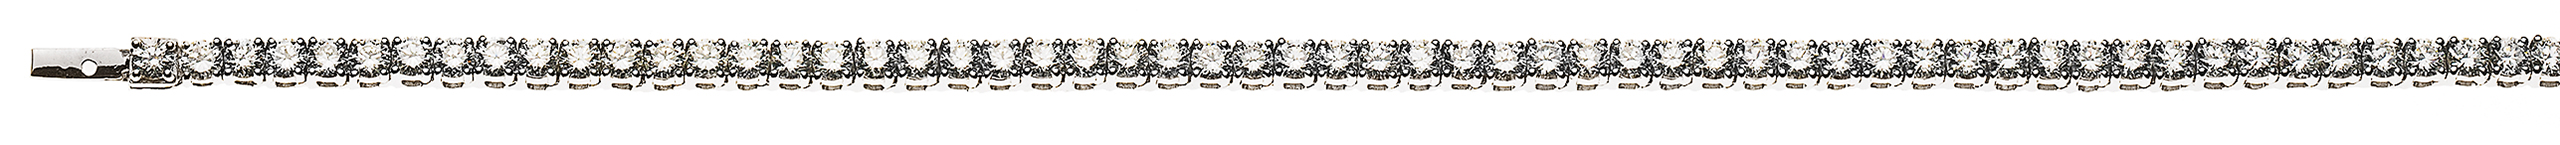 AURONOS Prestige Armband 18K Weissgold 70 Diamanten 3.95ct 18cm